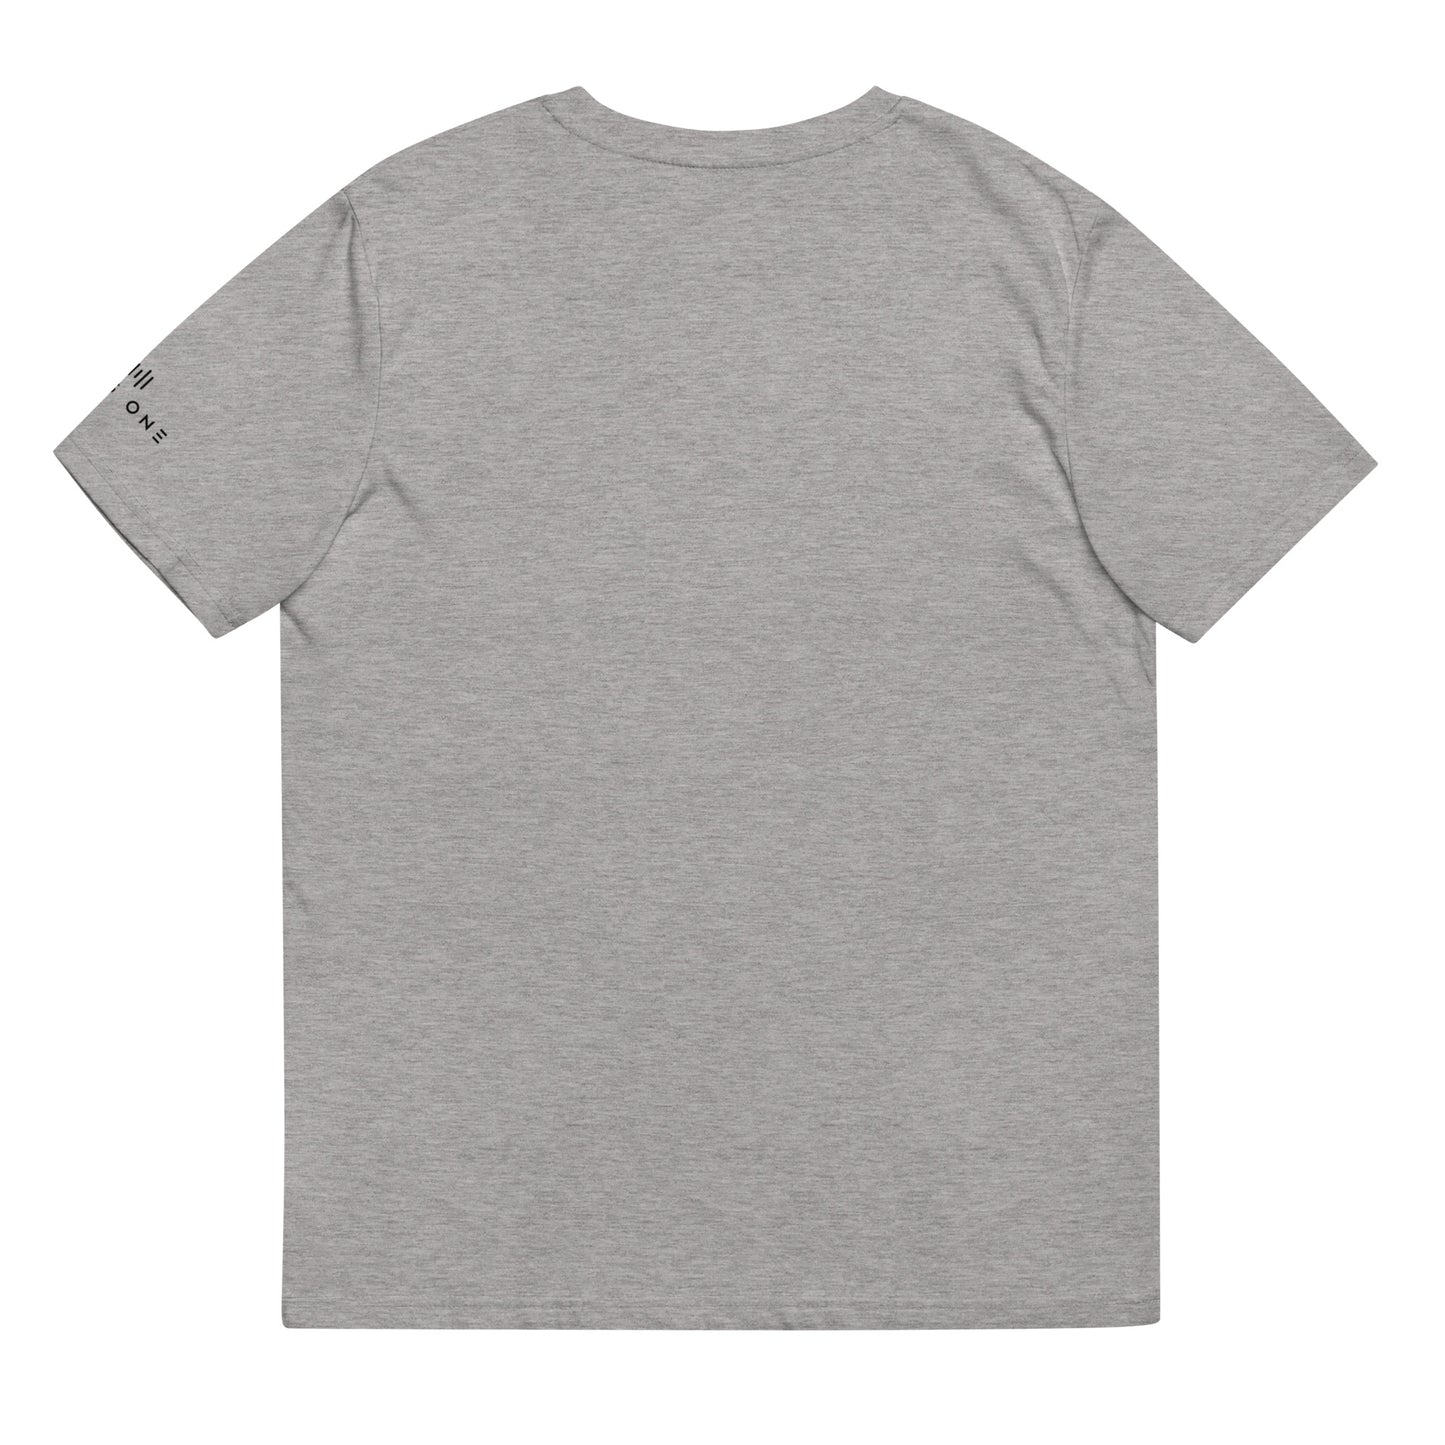 NFTM (v2) Unisex organic cotton t-shirt (Black Text)